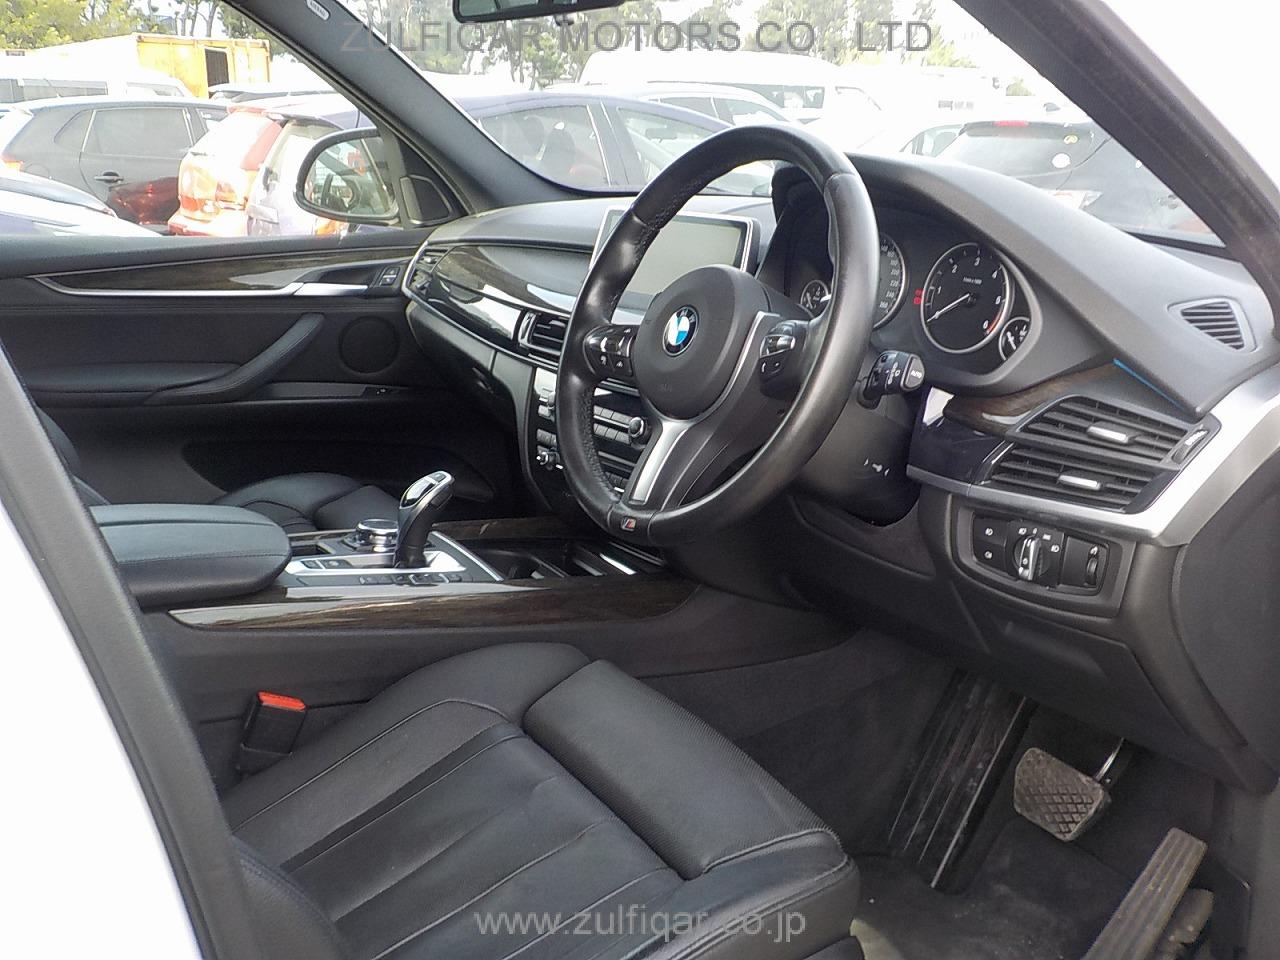 BMW X5 2016 Image 44